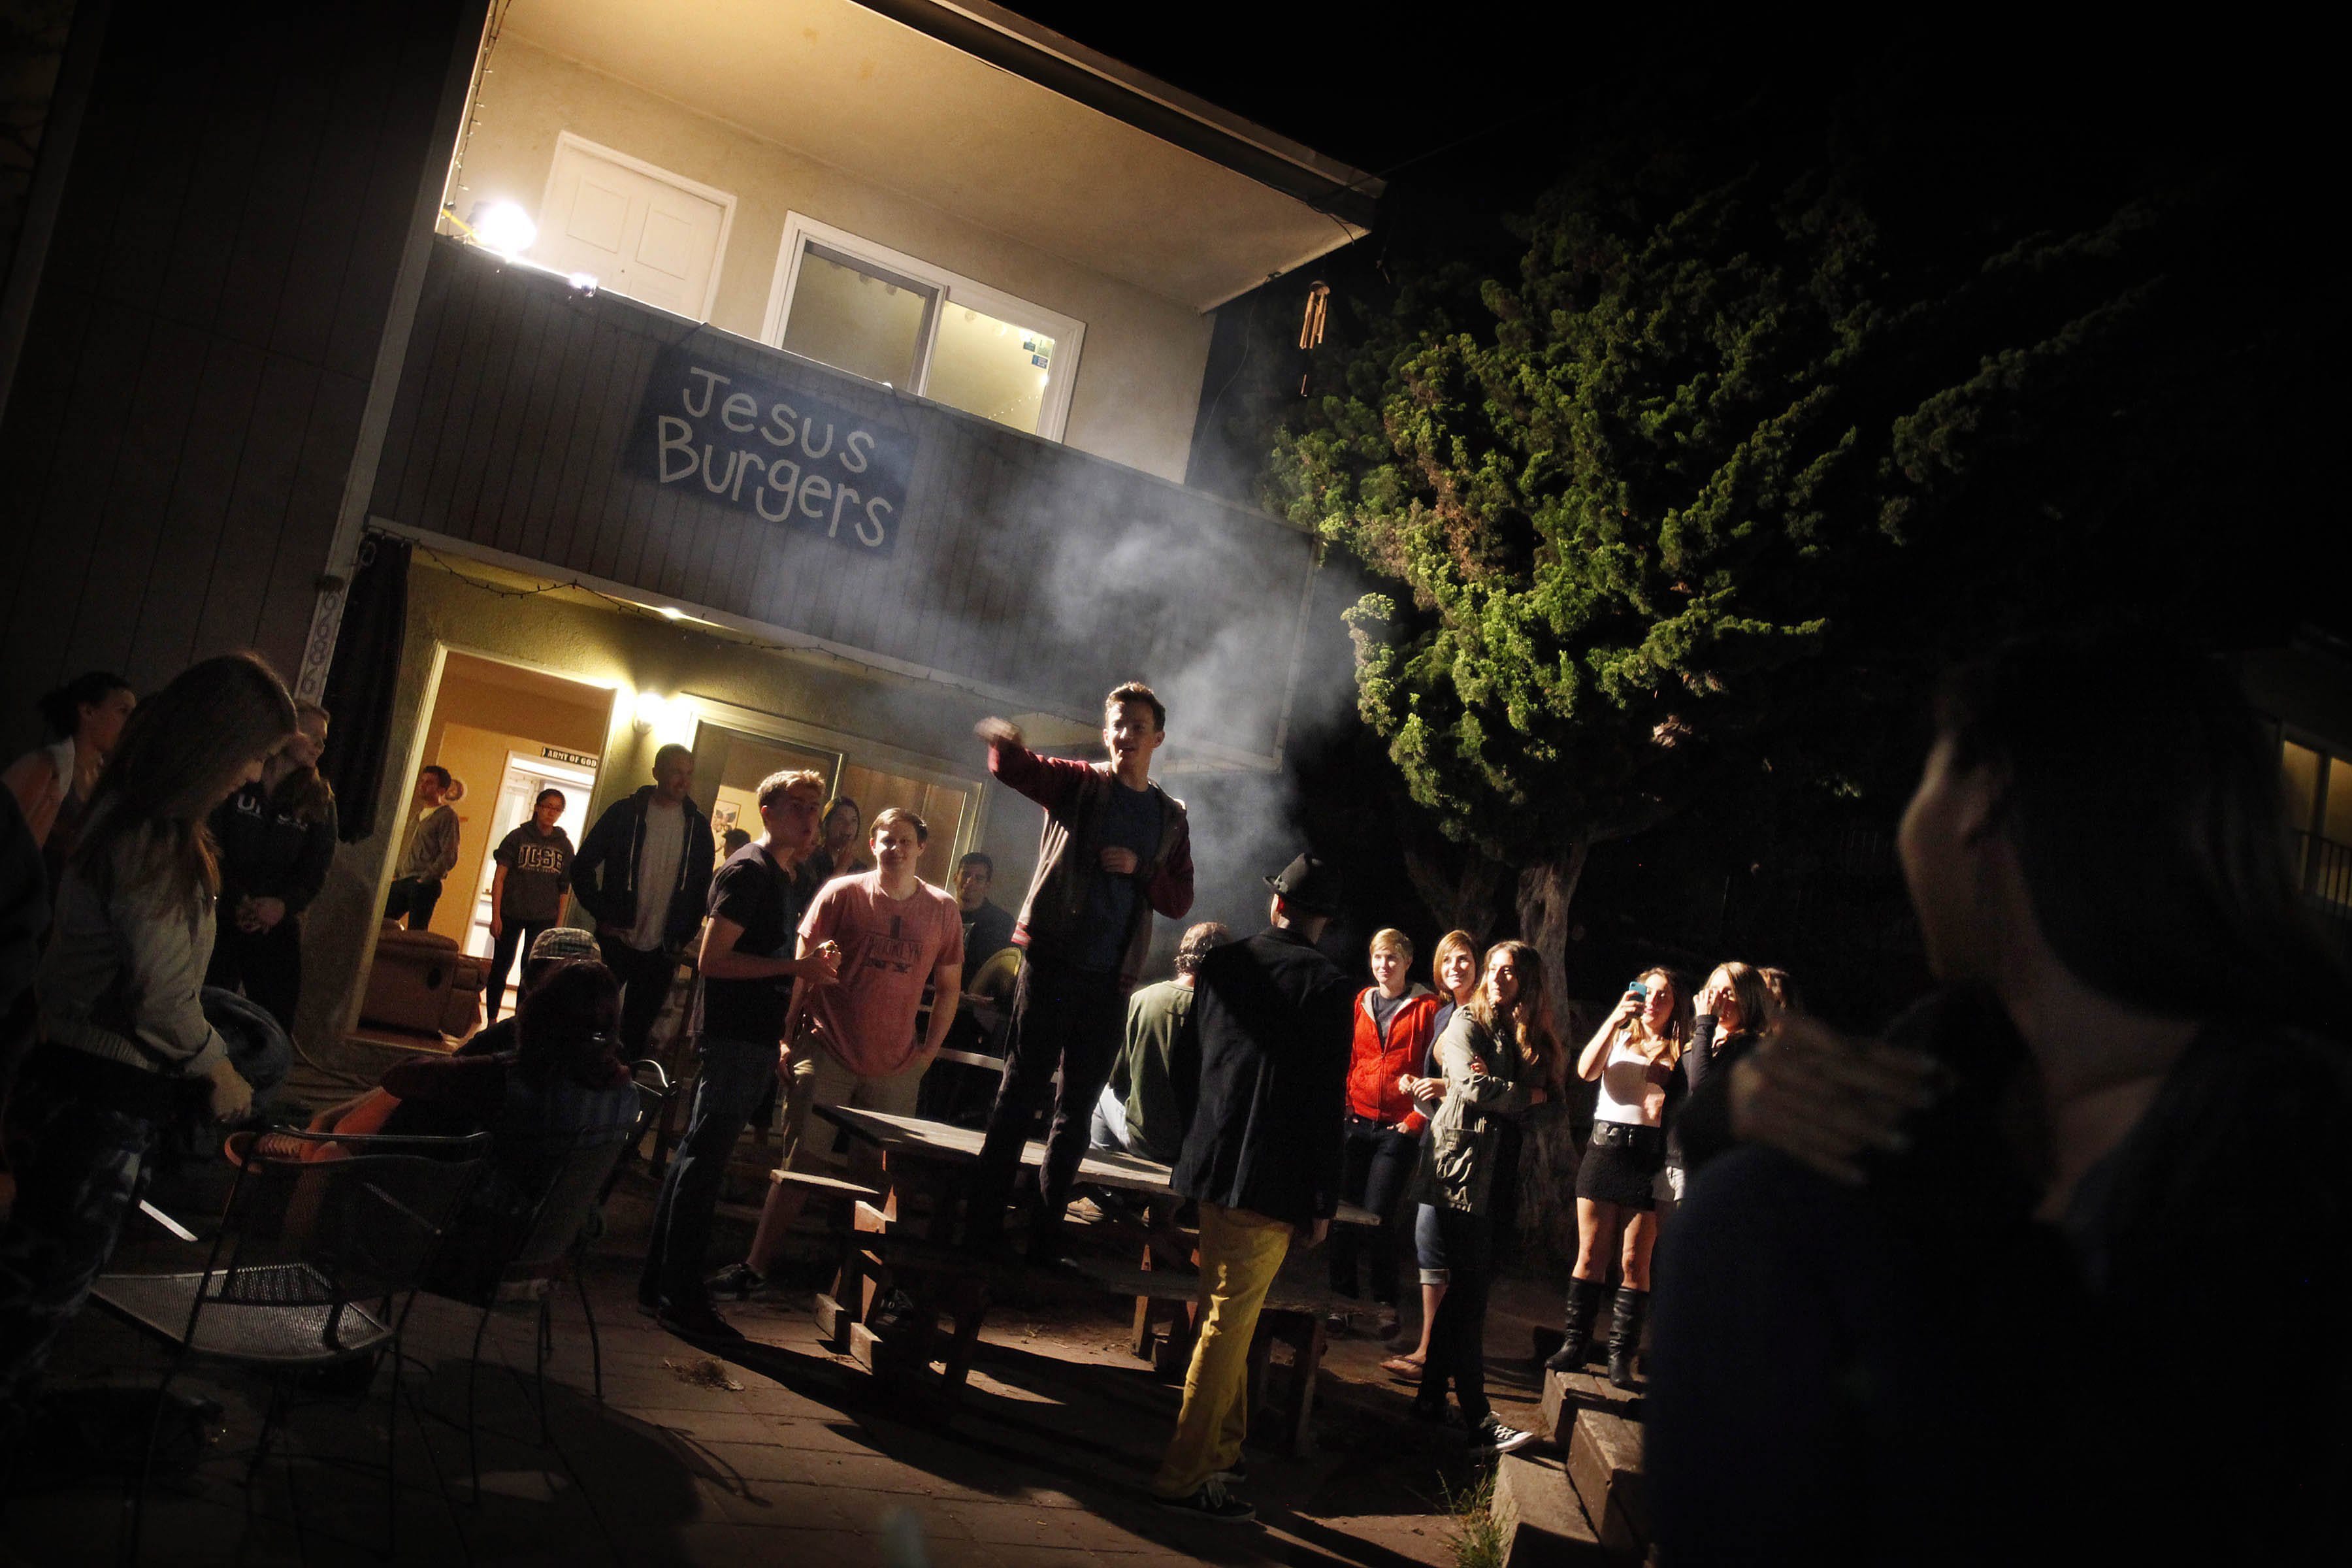 Students eat burgers and mingle at the Jesus Burgers house in May in Santa Barbara, Calif.'s Isla Vista neighborhood.